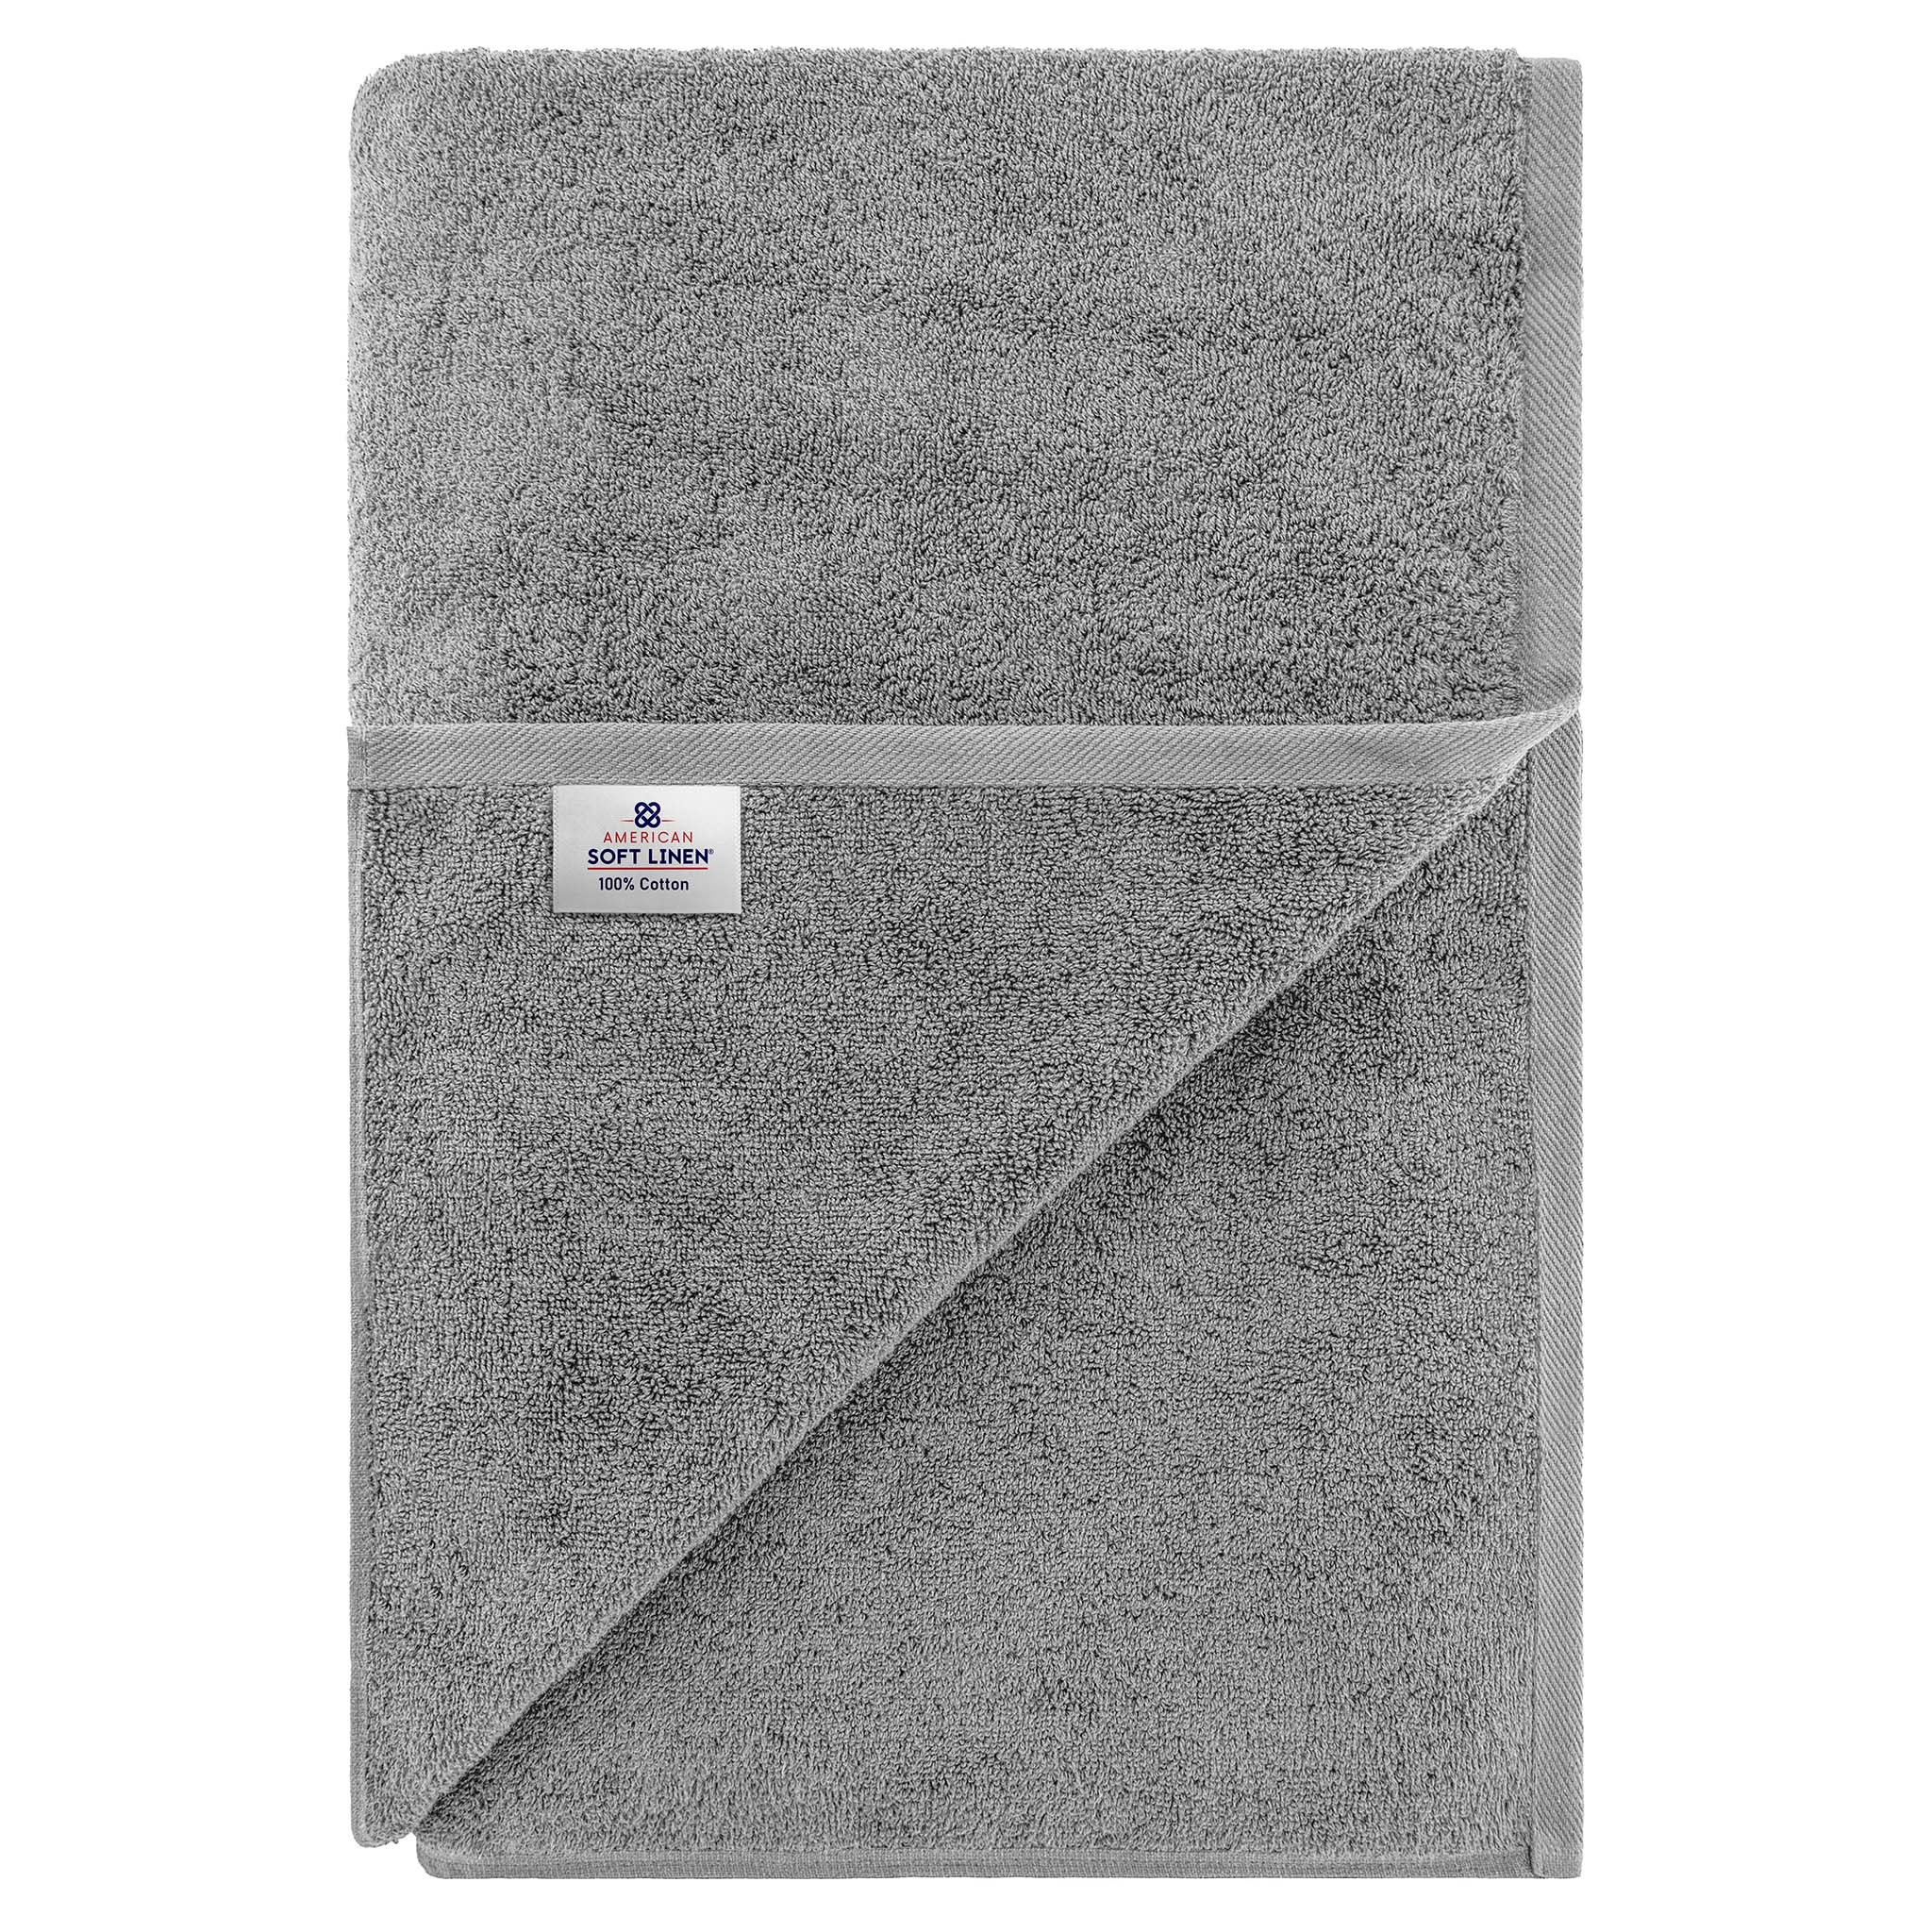 American Soft Linen 100% Ring Spun Cotton 40x80 Inches Oversized Bath Sheets rockridge-gray-7